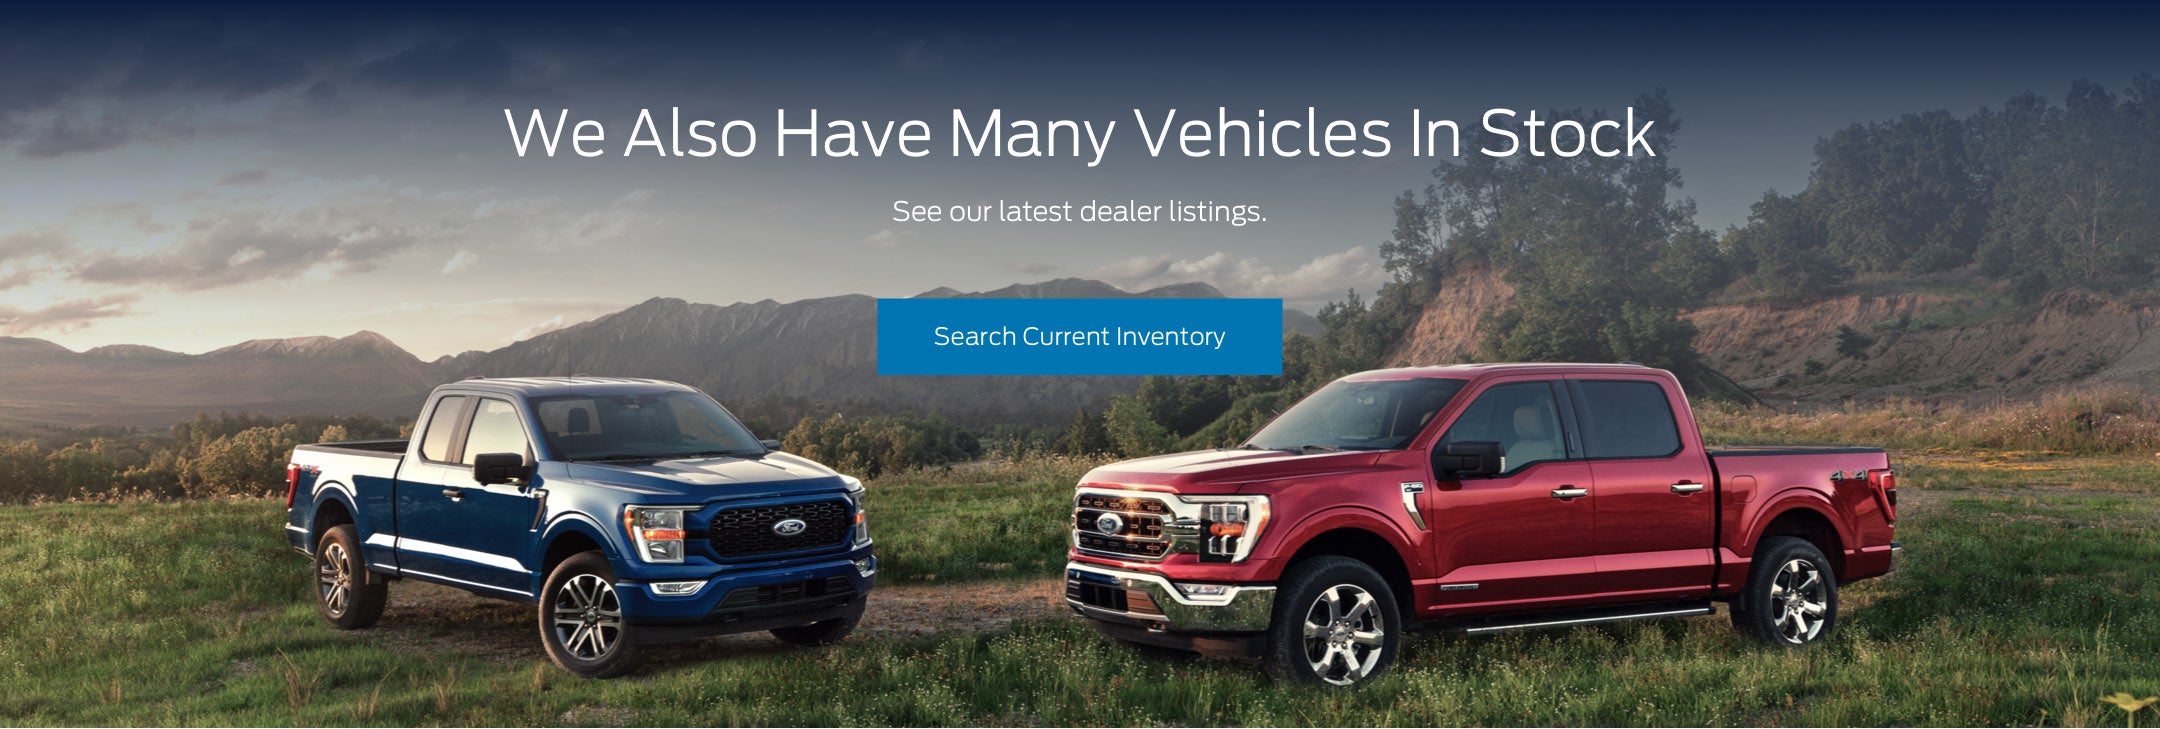 Ford vehicles in stock | Jordan Ford in San Antonio TX